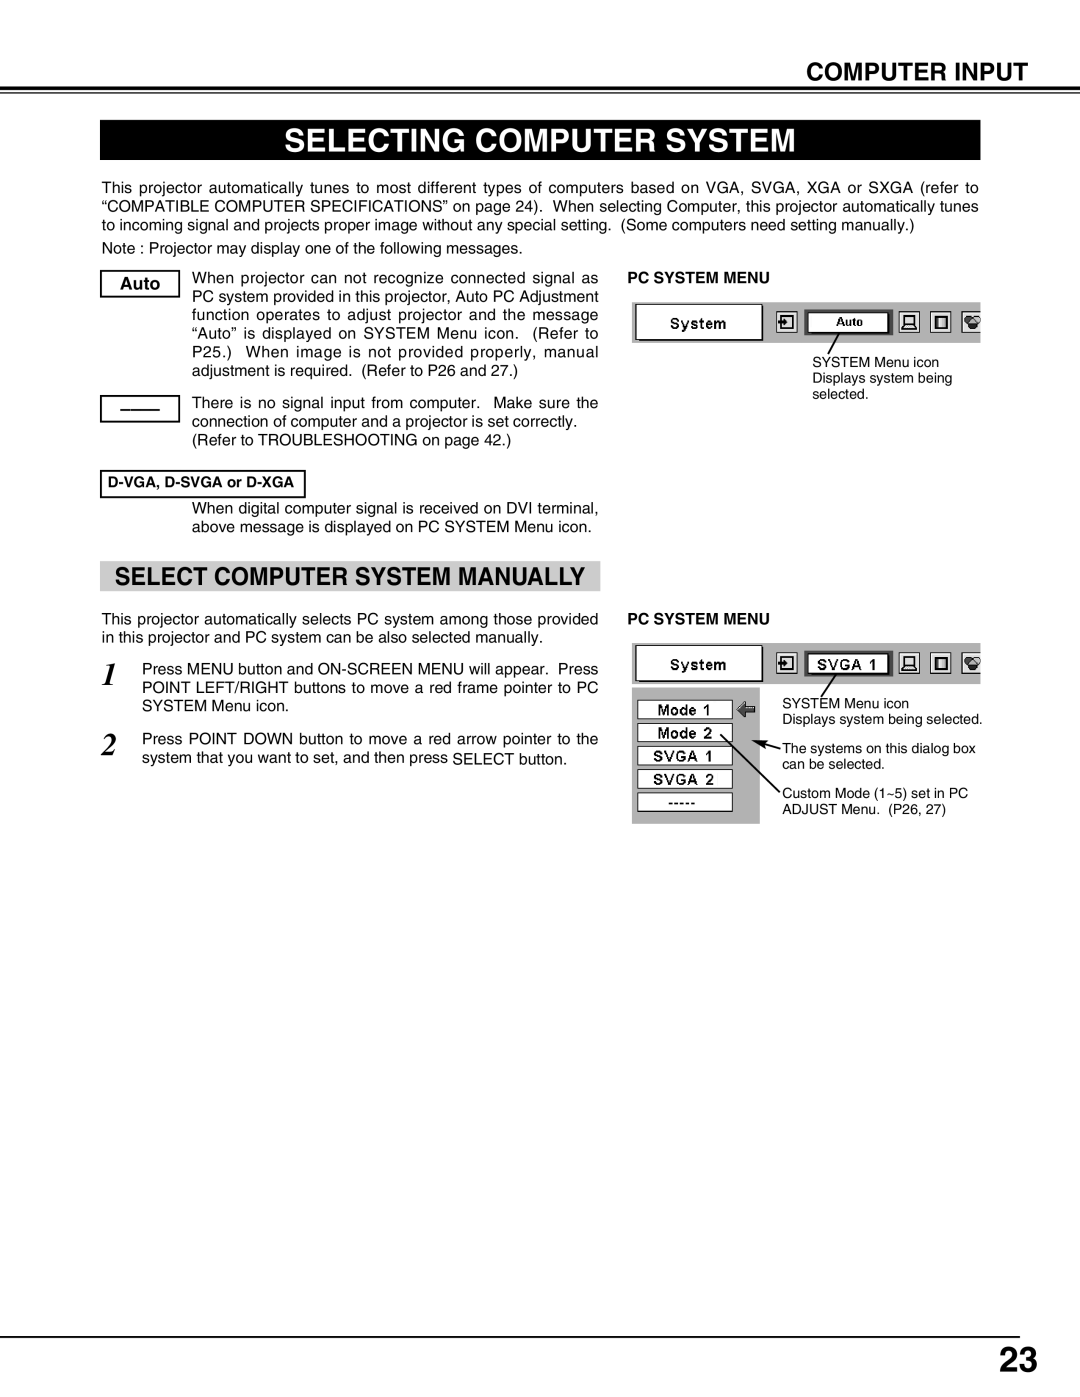 Christie Digital Systems 38-VIV207-01 Selecting Computer System, Select Computer System Manually, Computer Input, Auto 